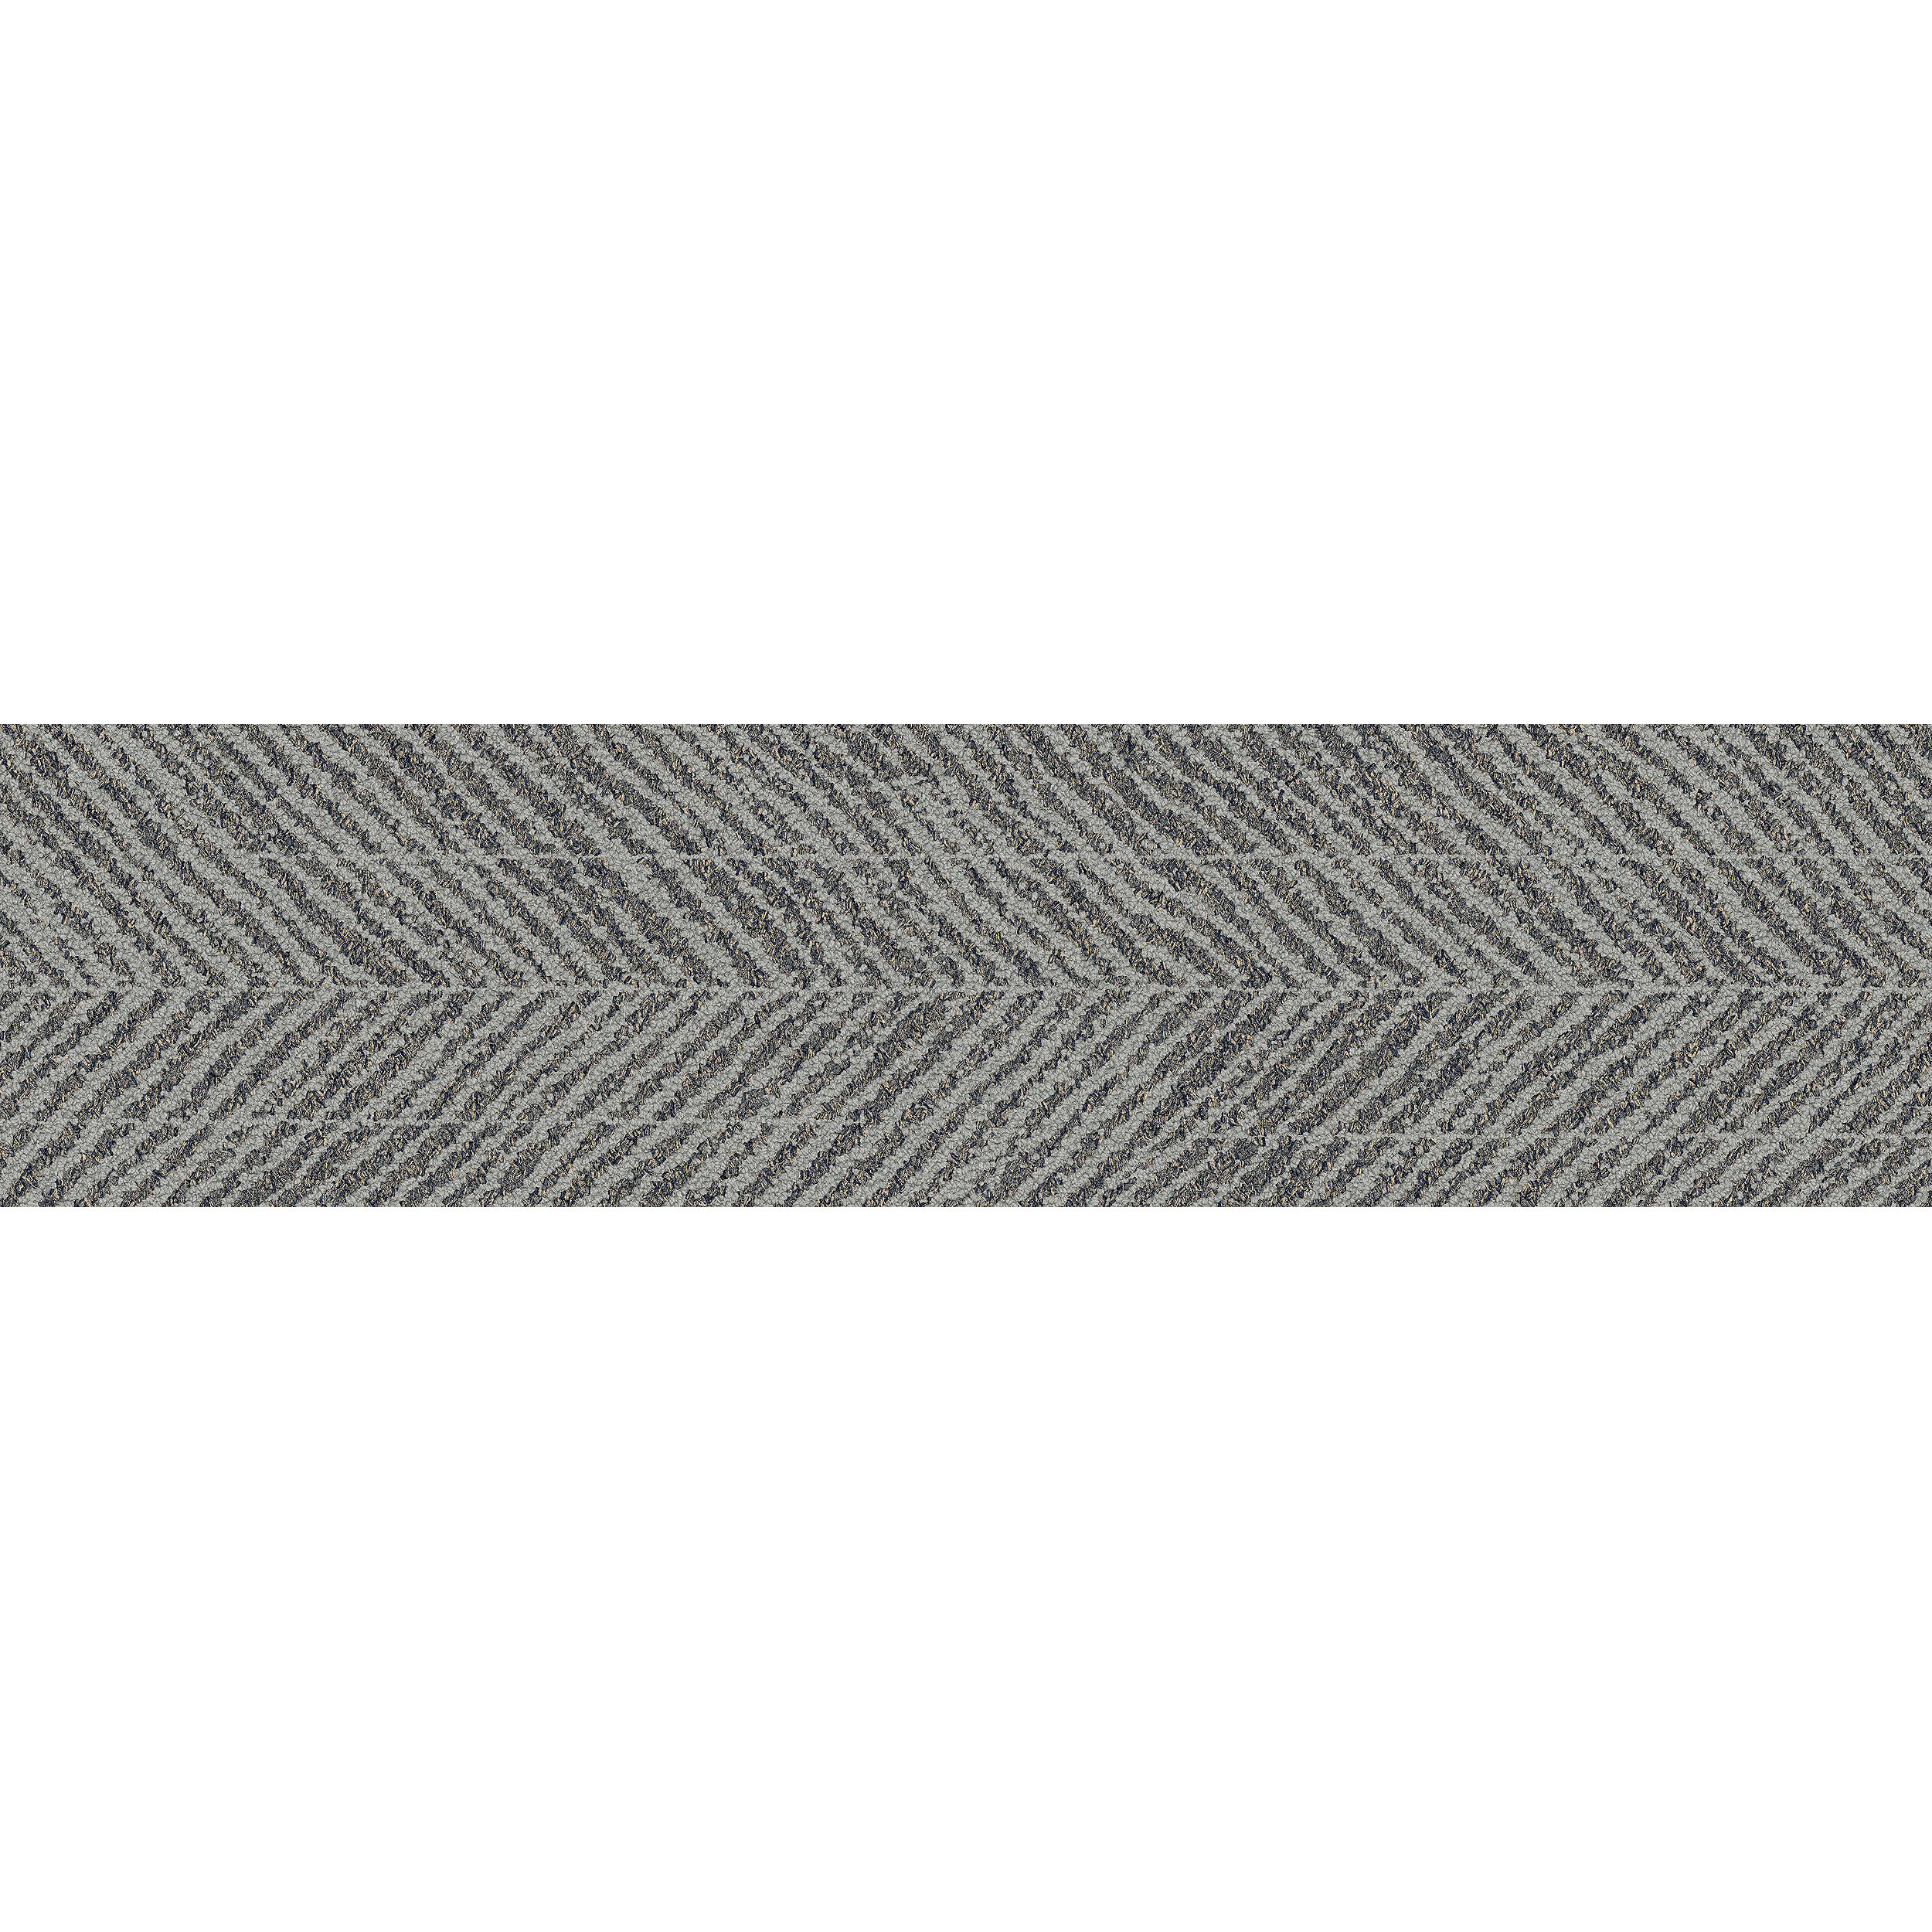 Third Space 310 Carpet Tile in Mist image number 4